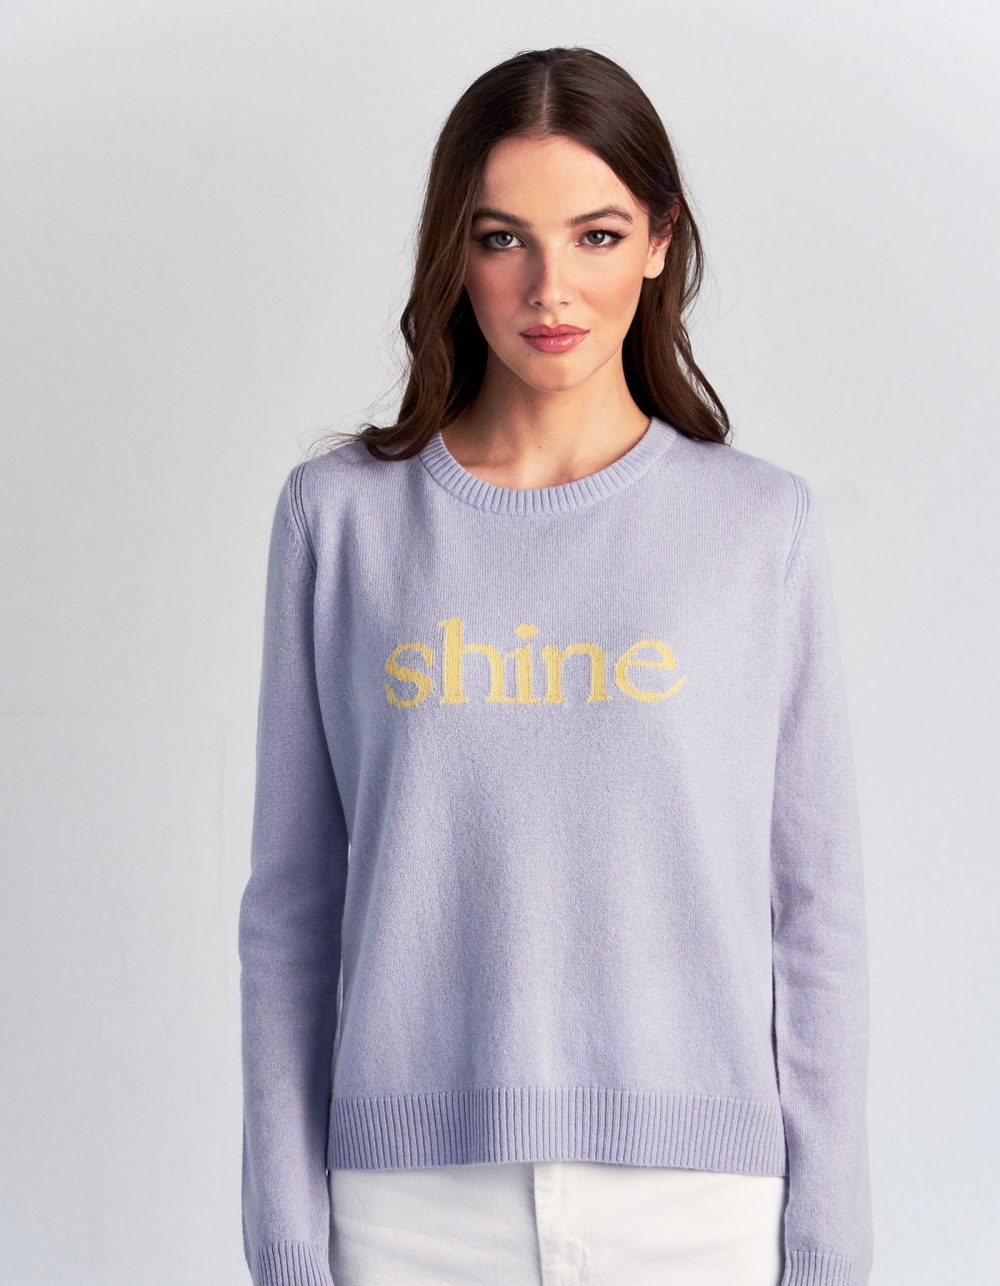 A woman modelling malin darlin womens designer cashmere, the Shine cashmere jumper.